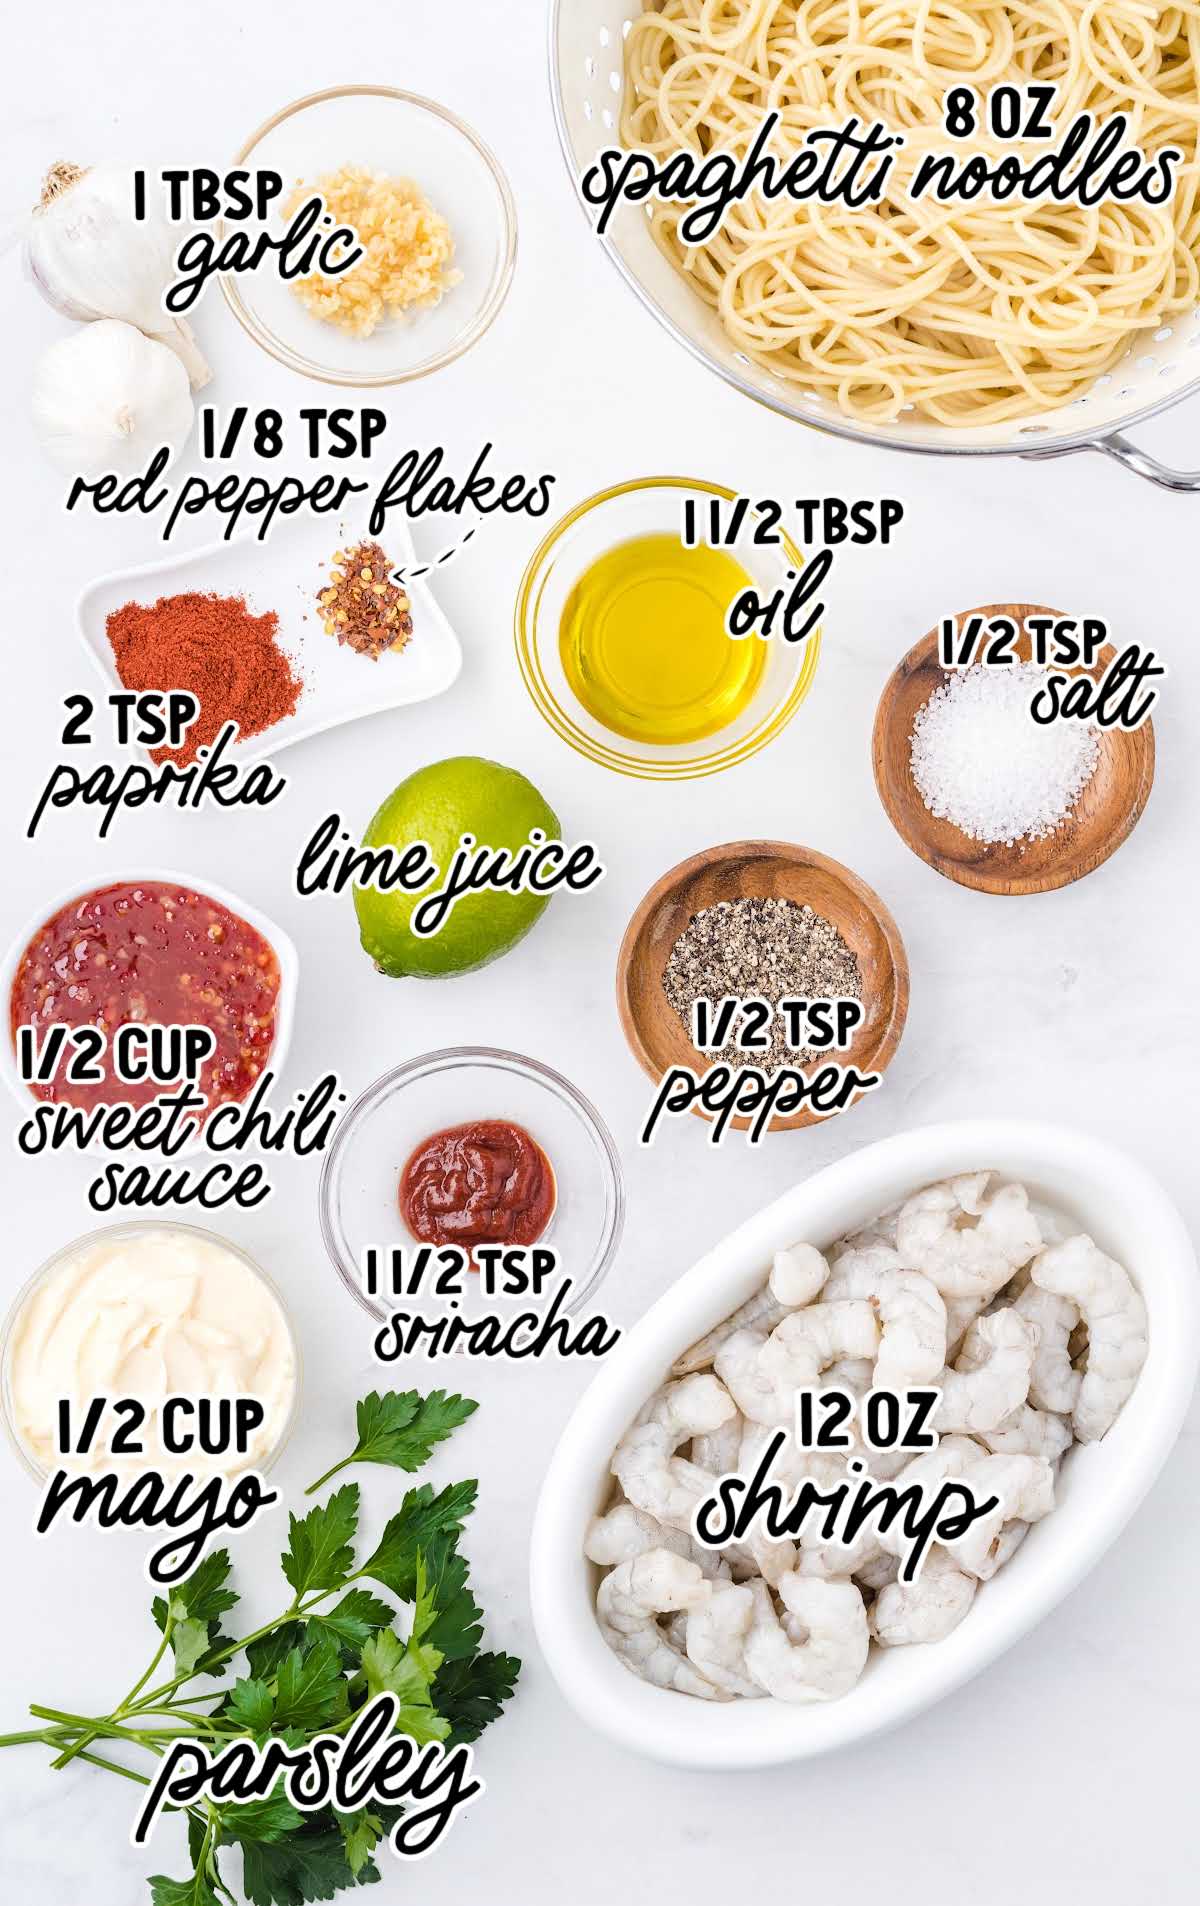 bang bang shrimp pasta raw ingredients that are labeled